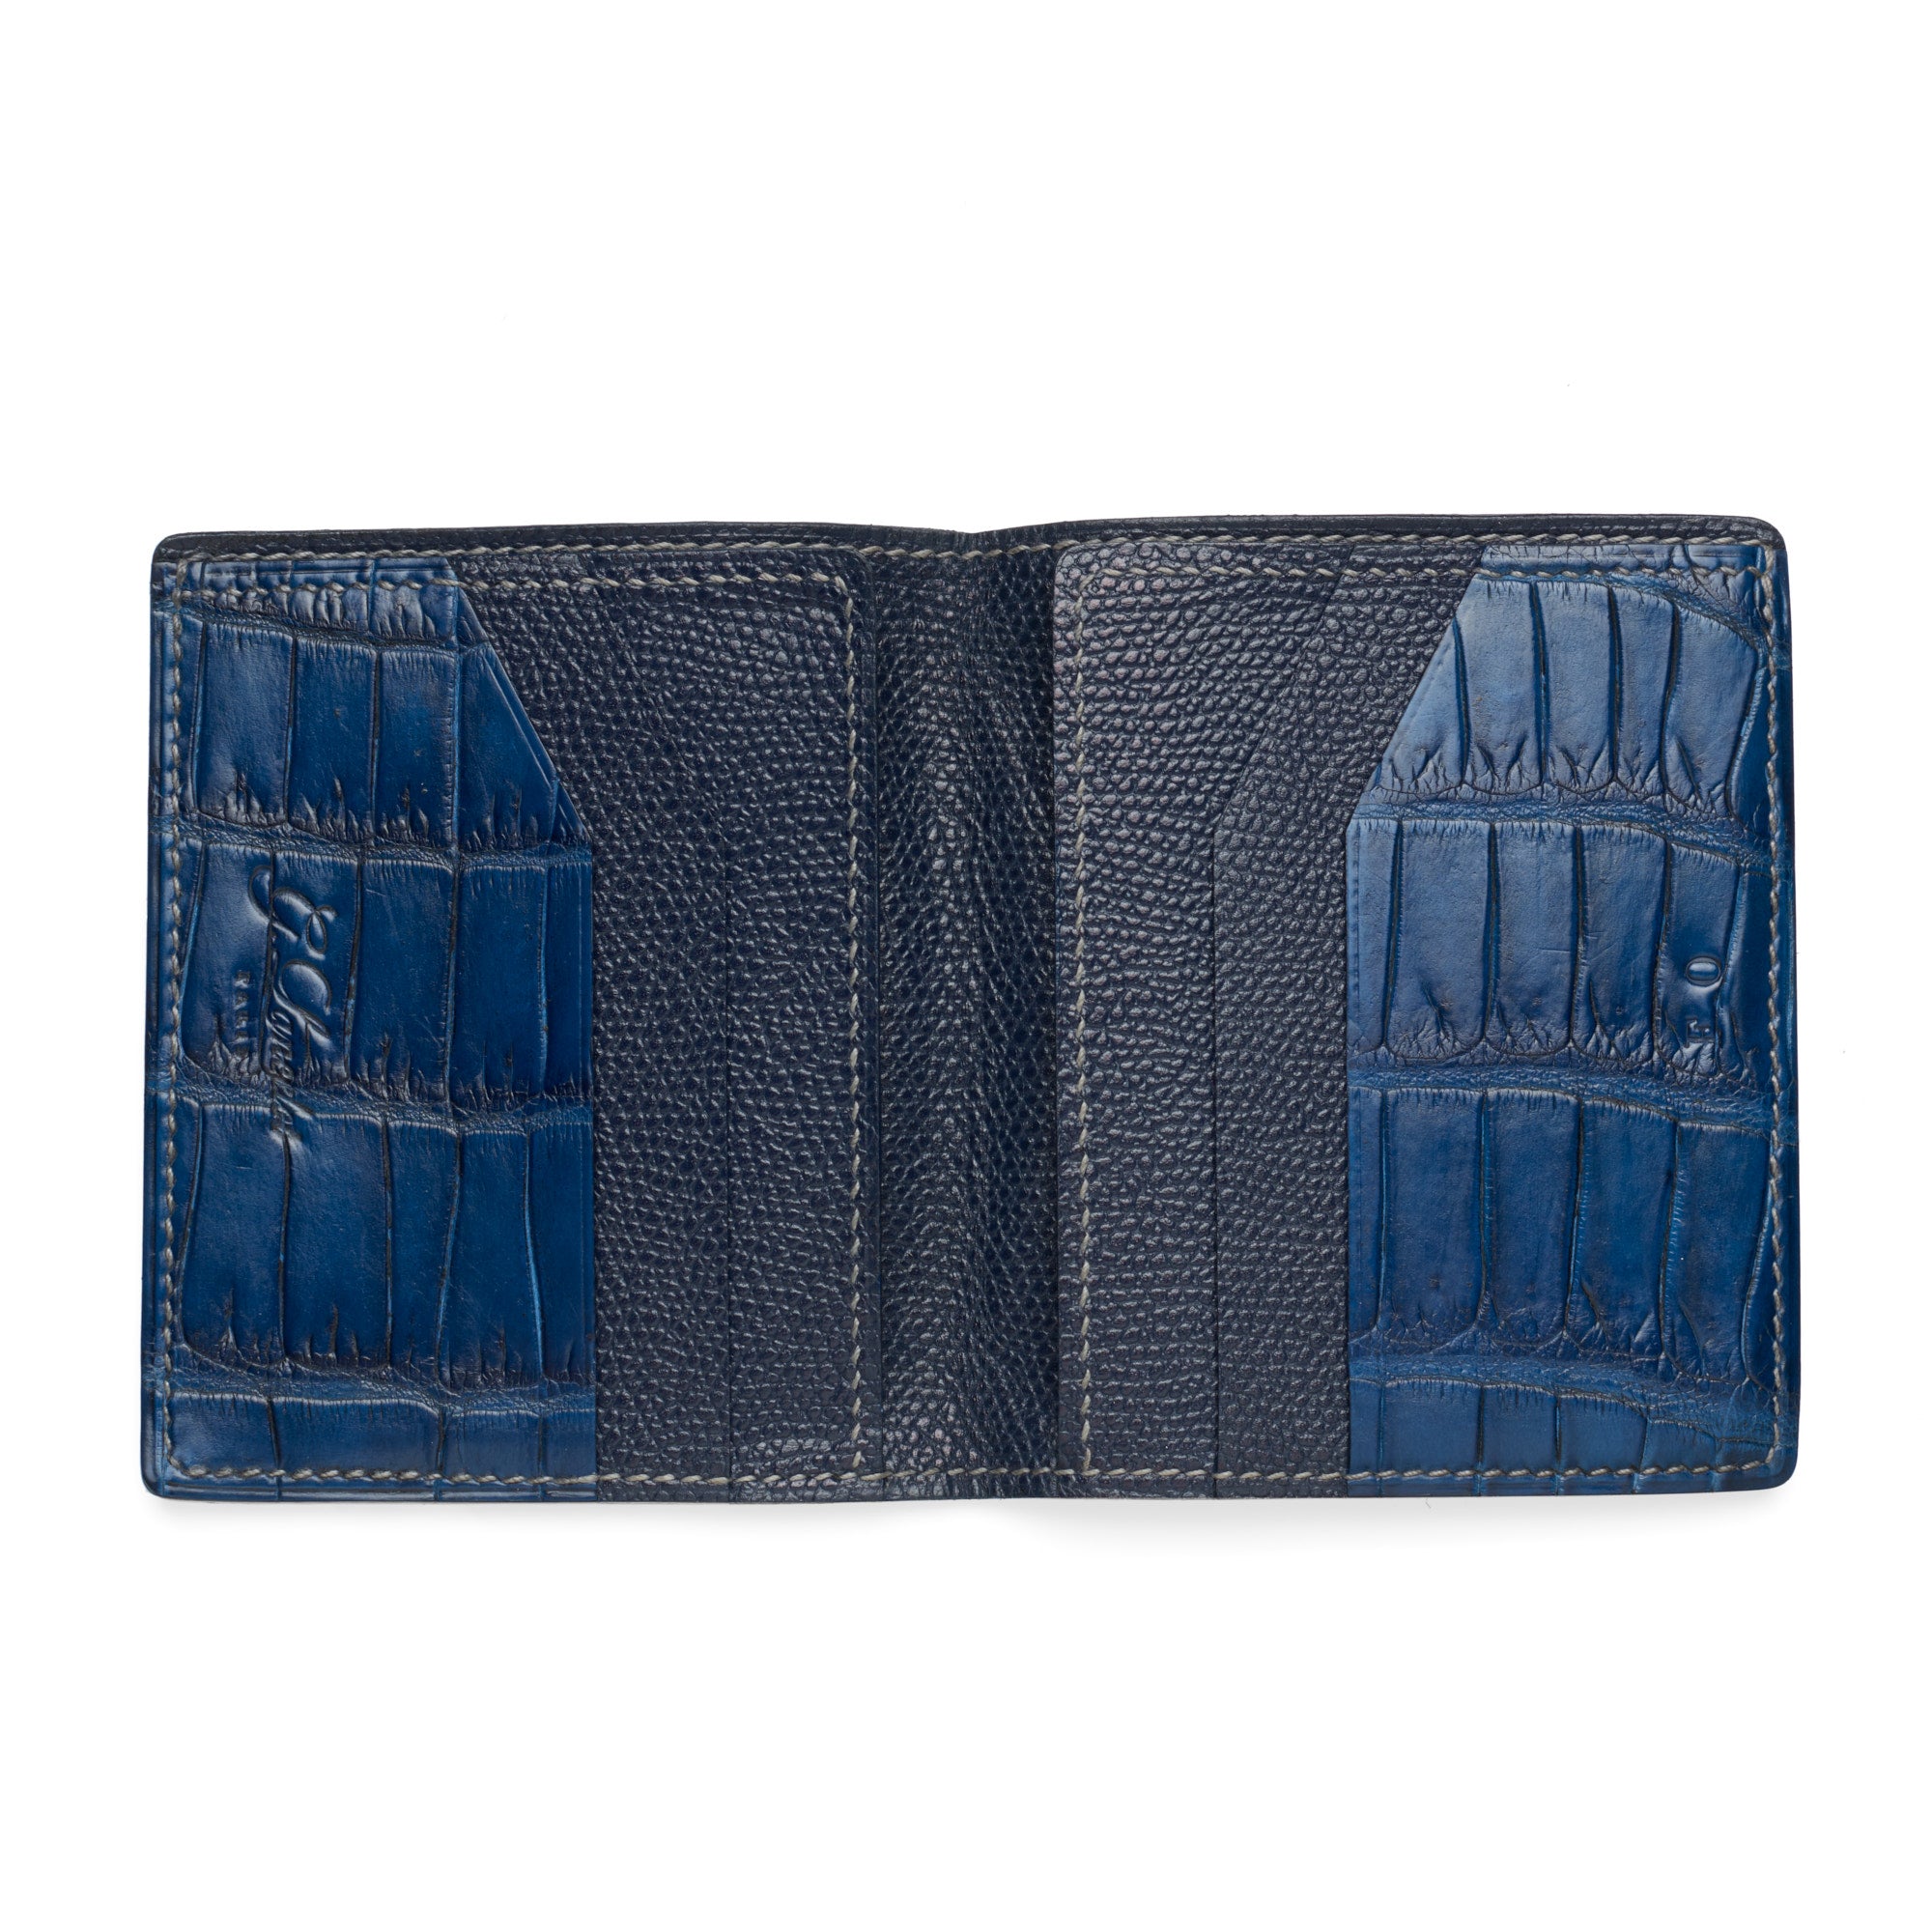 G LANCELOT Paris Blue Crocodile Leather Billfold Card Holder Wallet